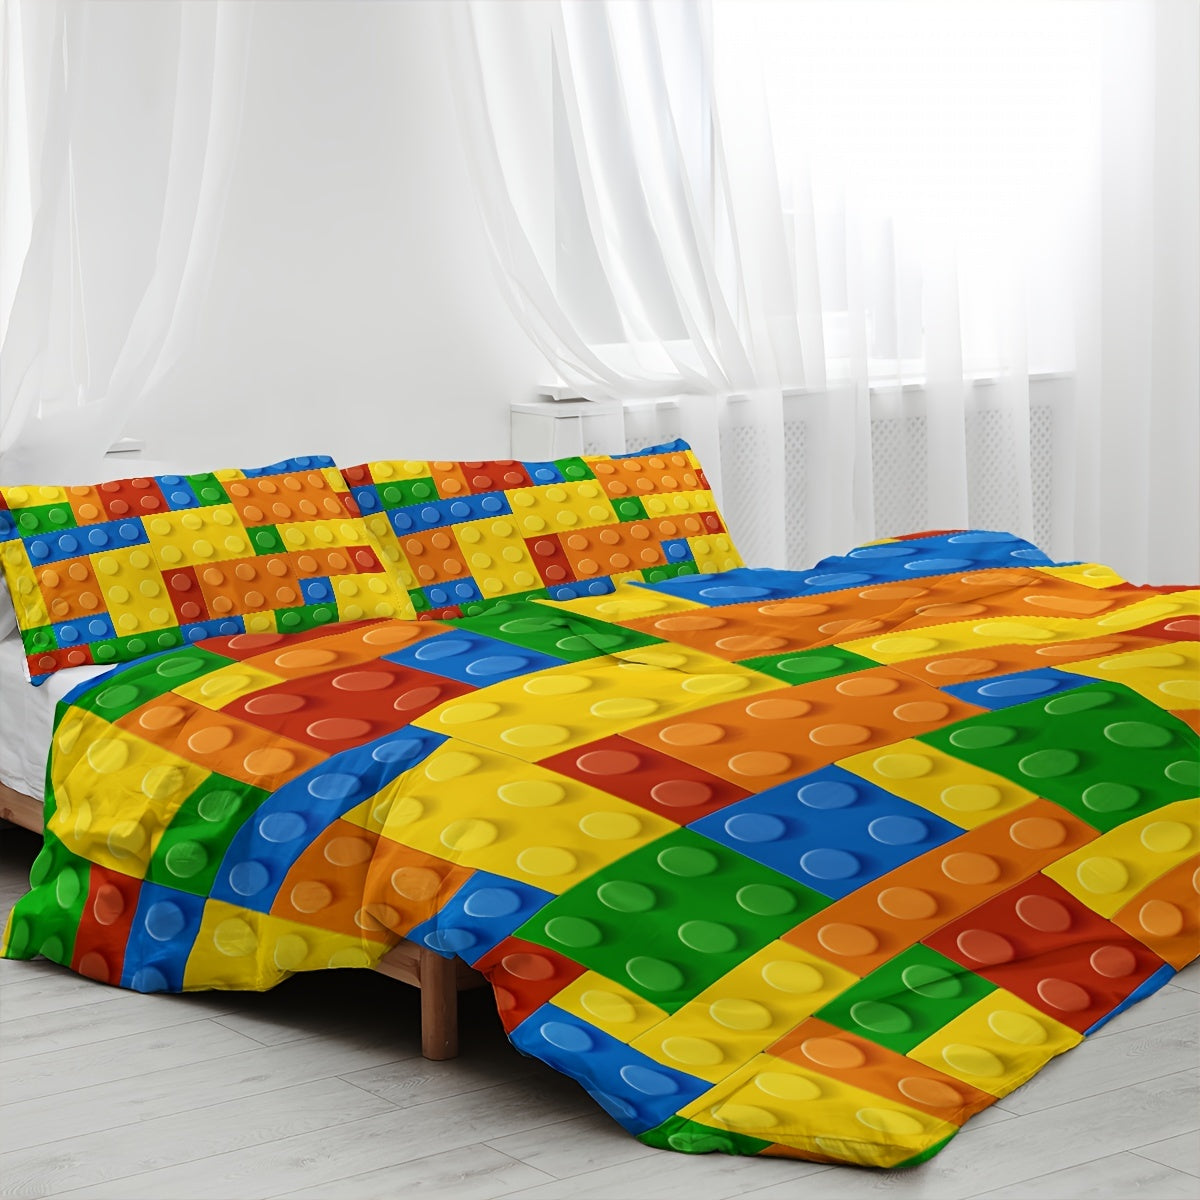 Colorful Block Pattern Duvet Cover Set